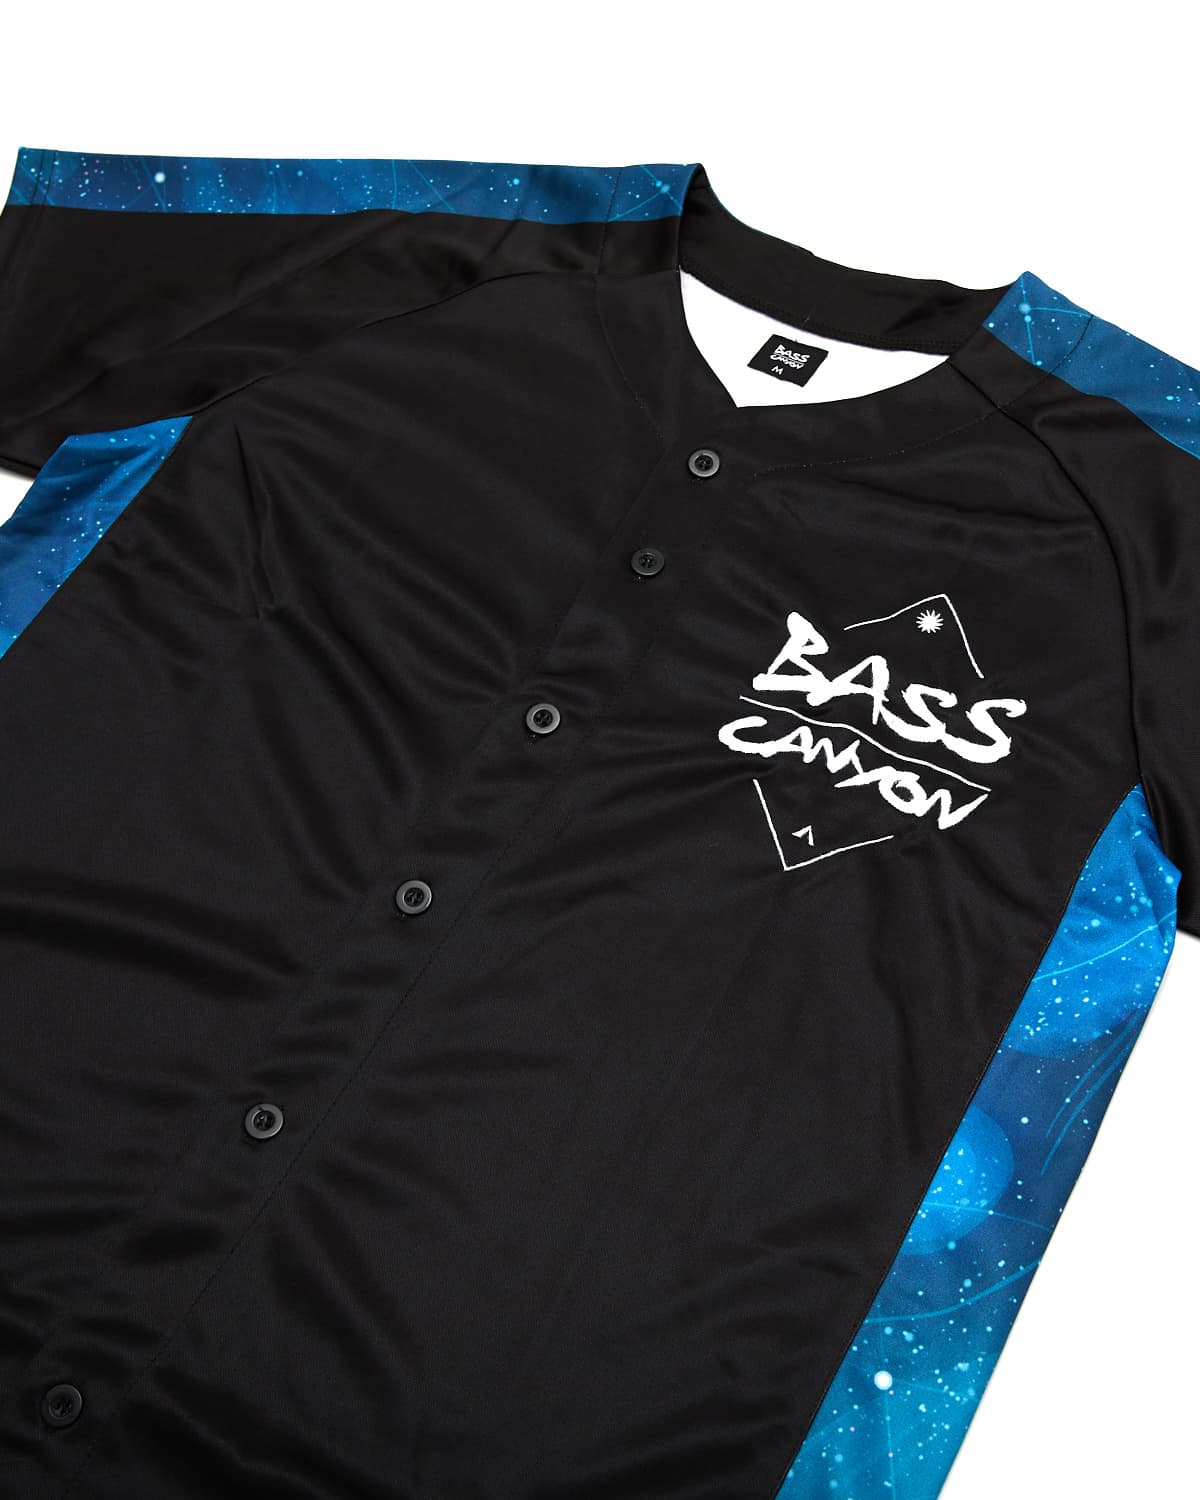 black and blue baseball jersey